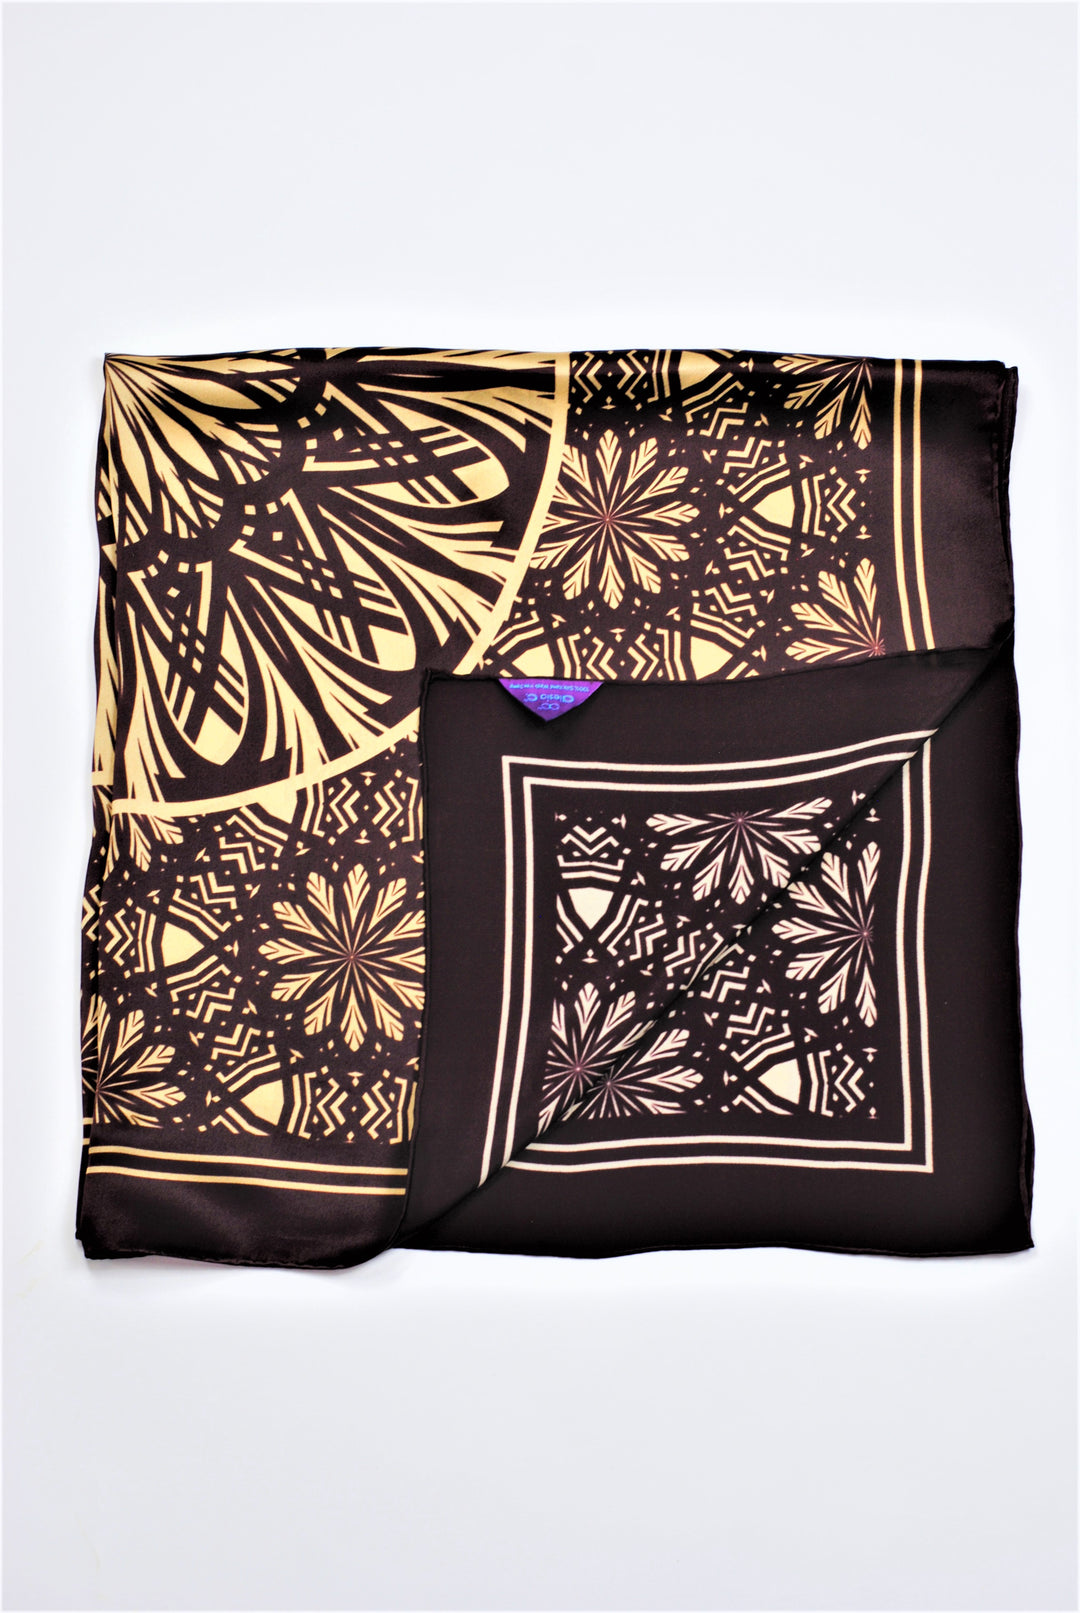 SERENITY Spiritual Mandala Art Silk Scarf in Brown-Beige by Alesia Chaika AlesiaC.com 1